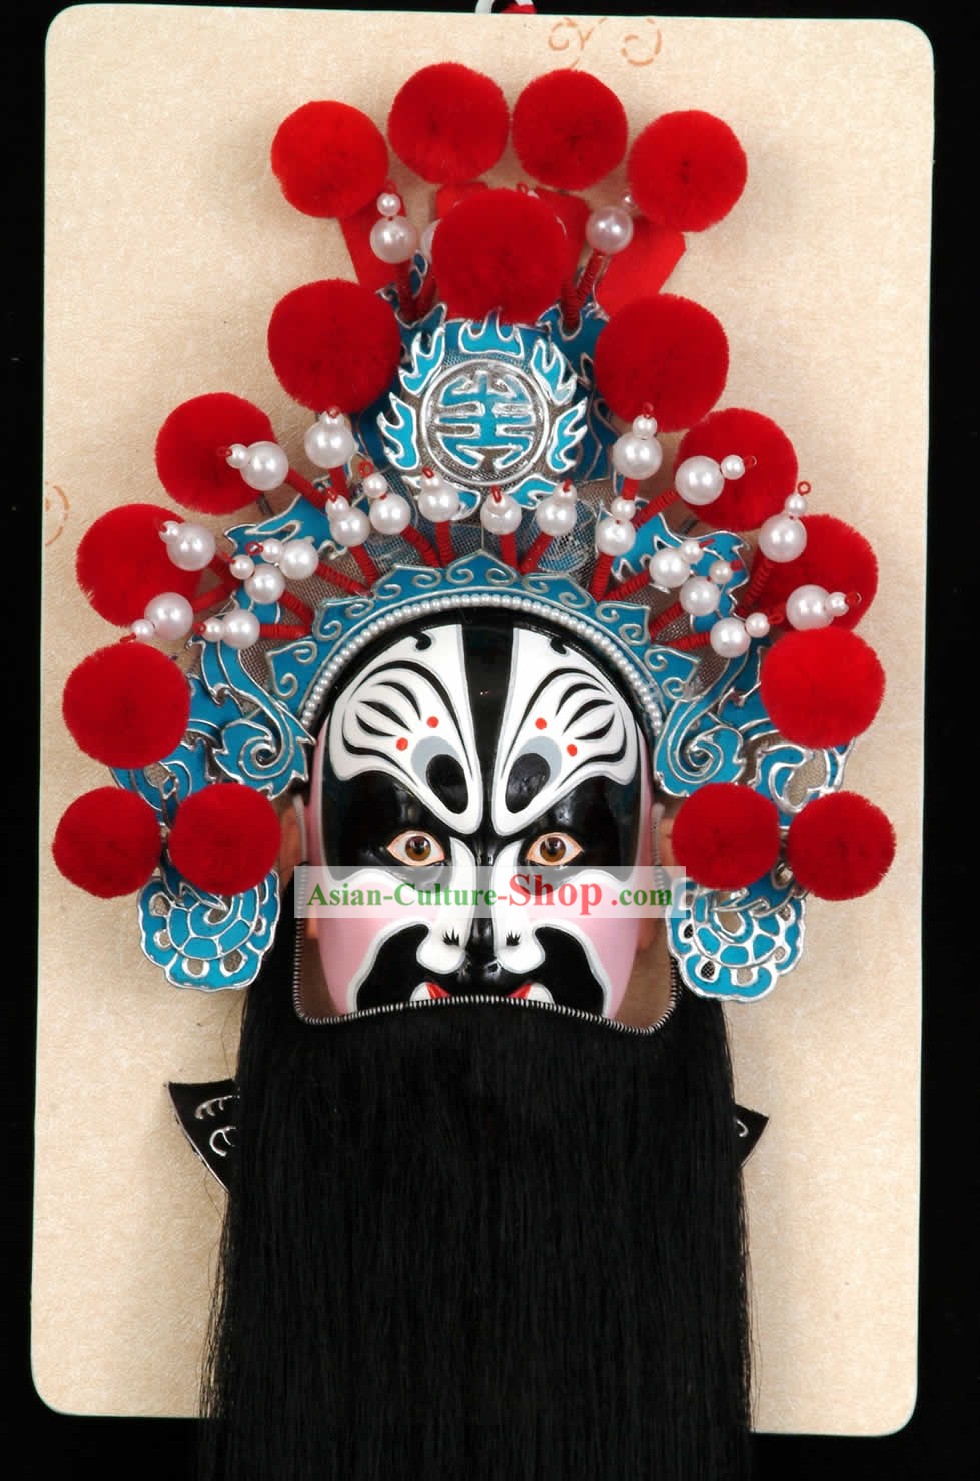 Handcrafted Peking Opera Mask Hanging Decoration - Zhang Fei